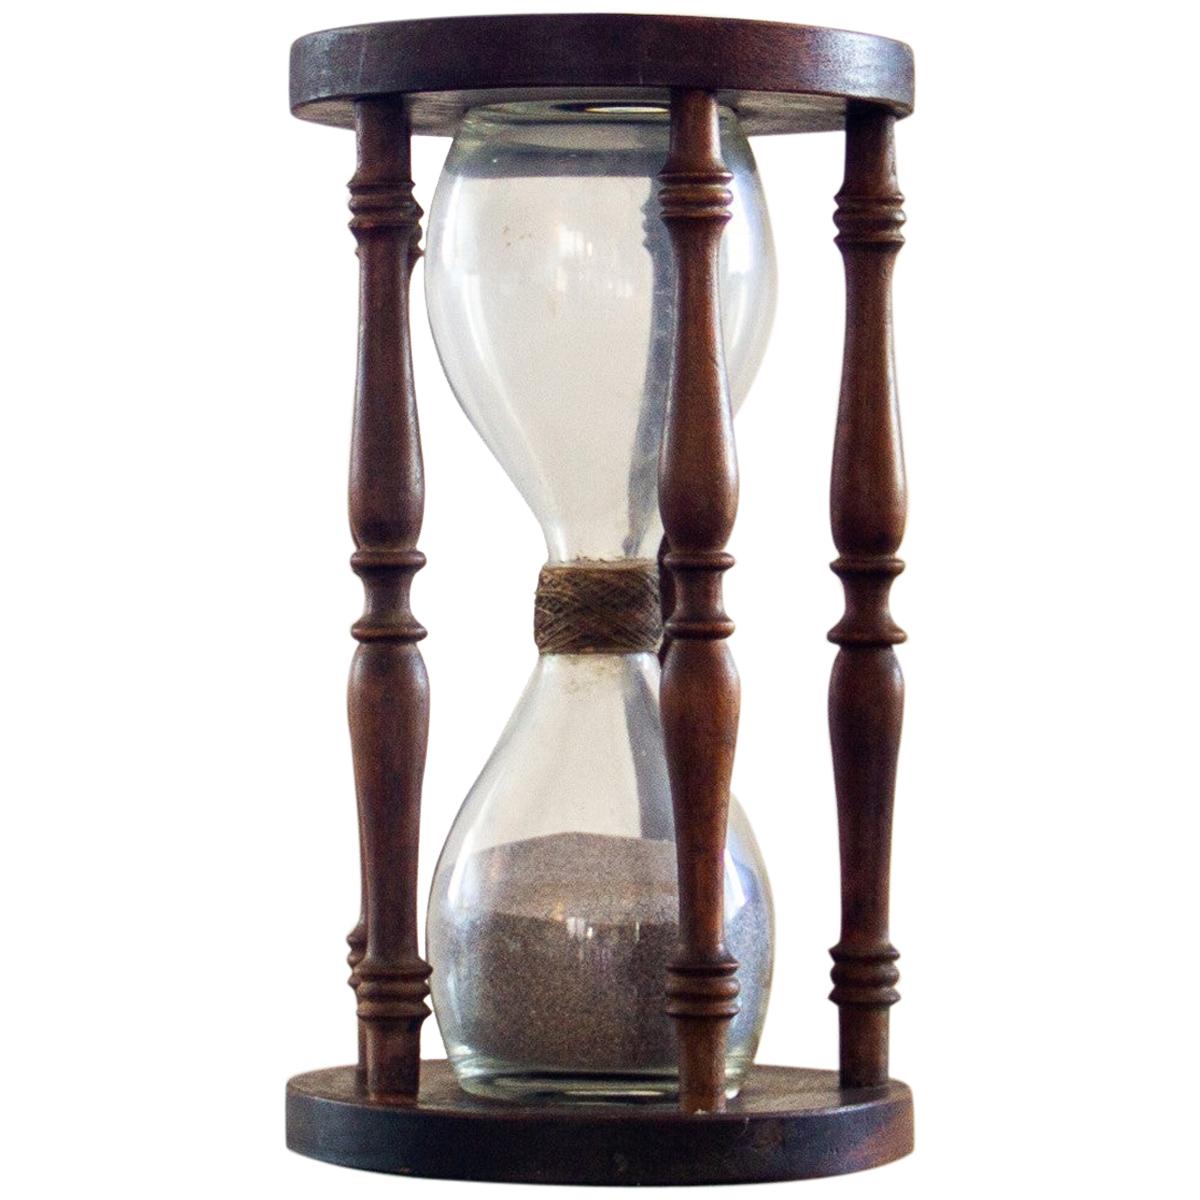 Large 19th Century Hourglass